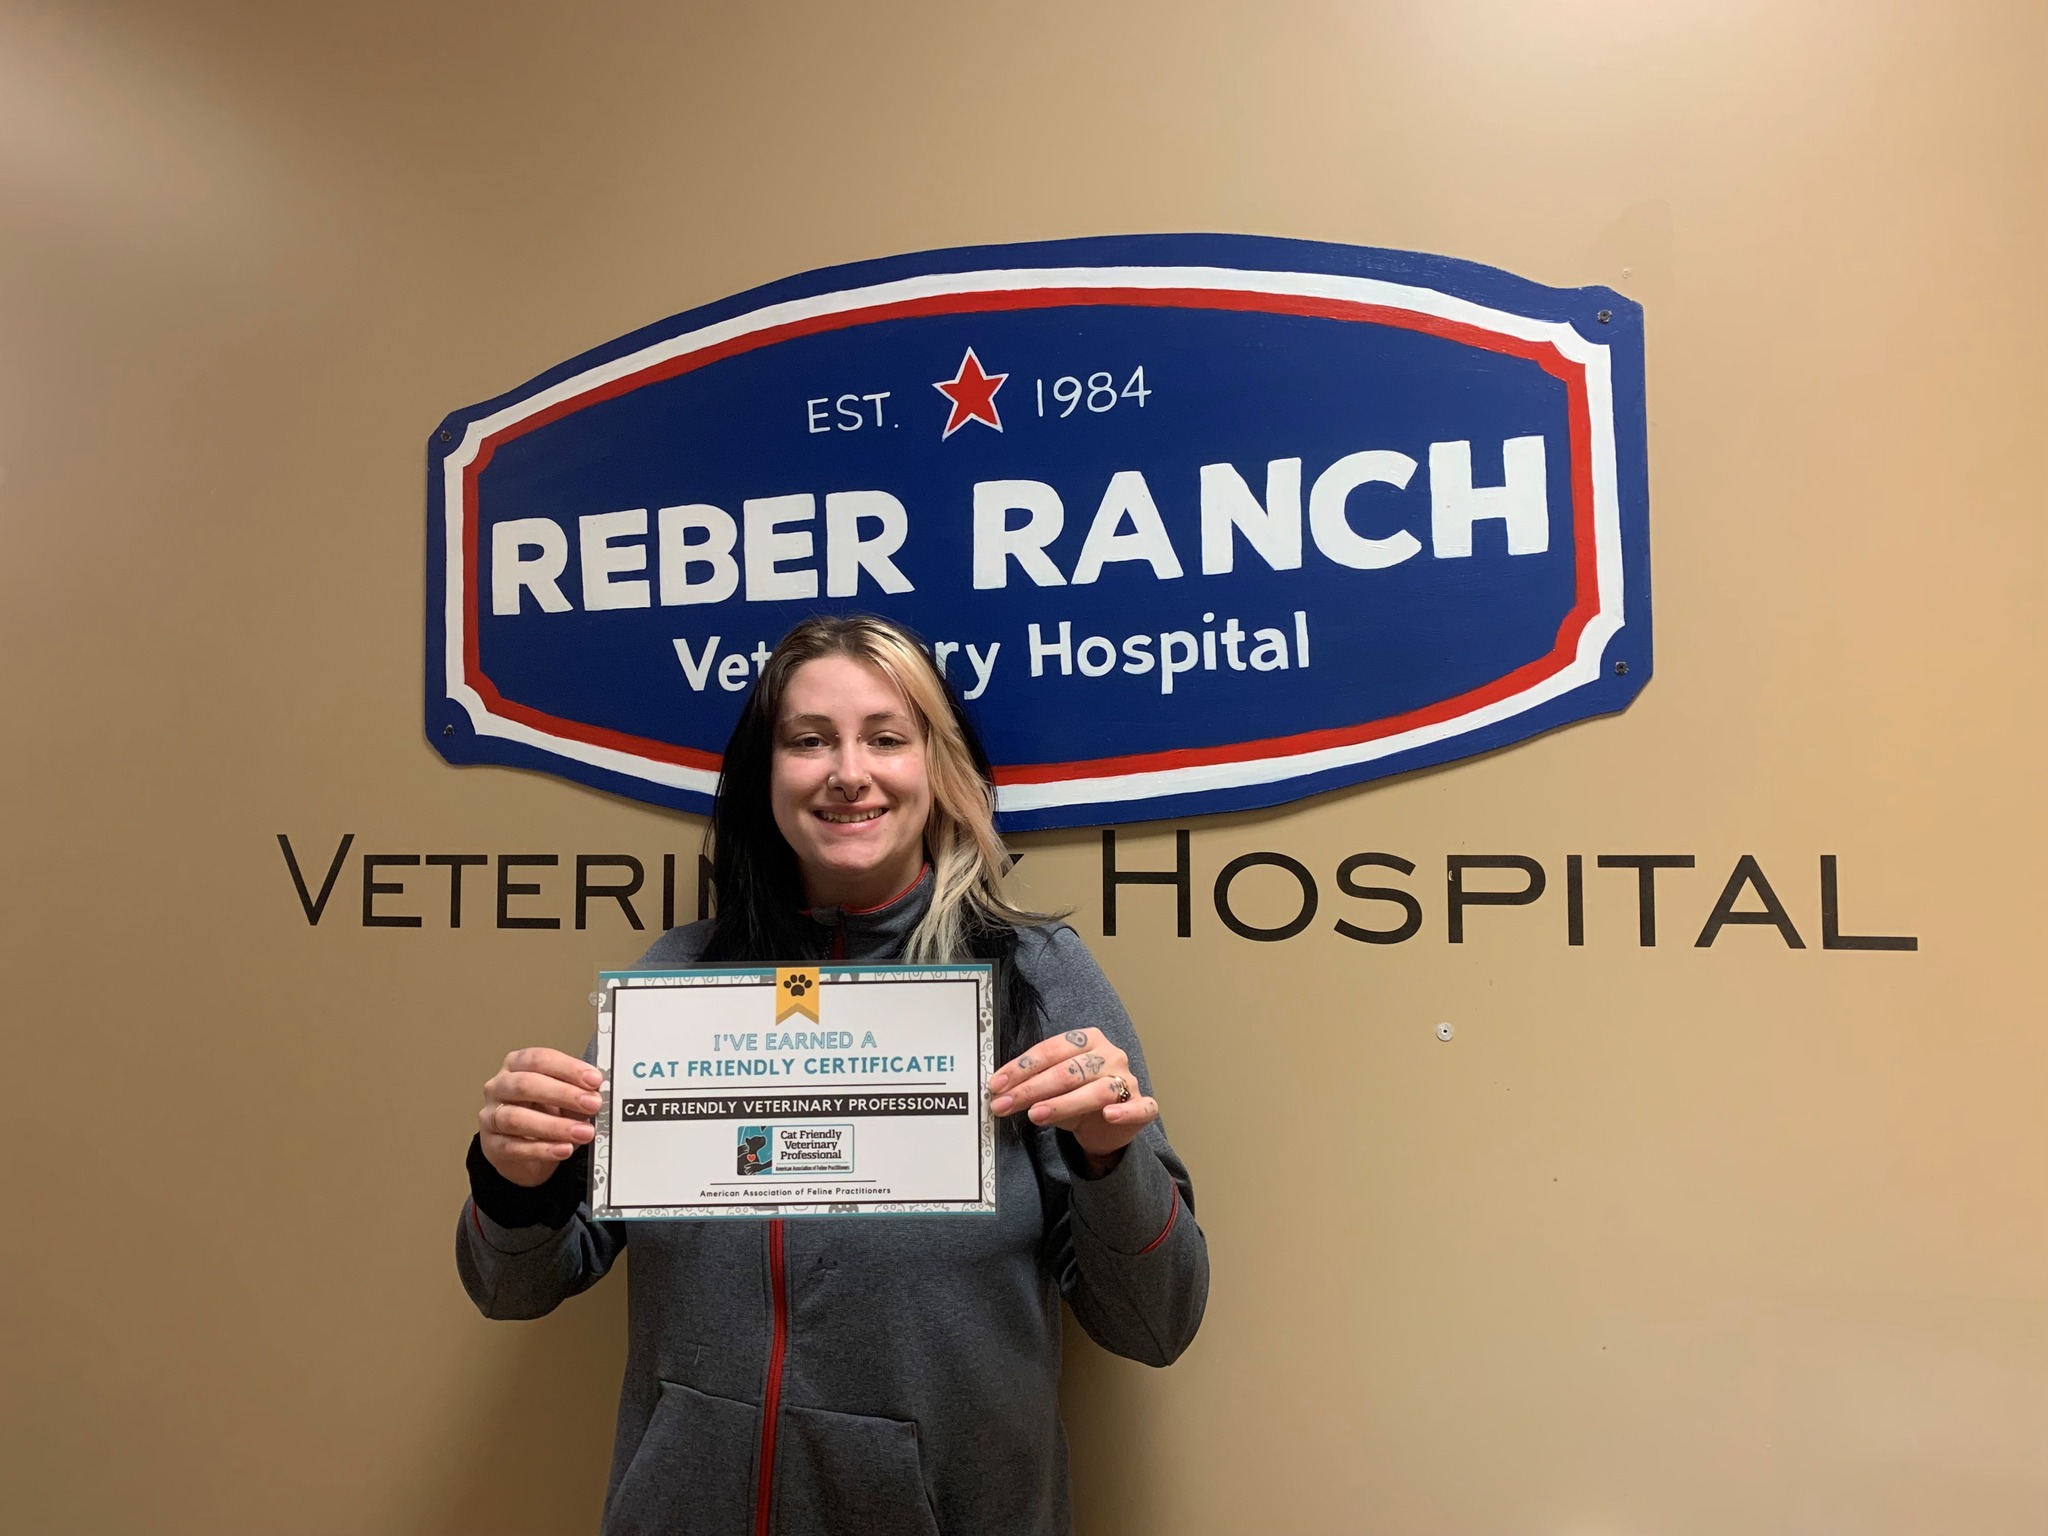 Reber Ranch Veterinary Hospital building front